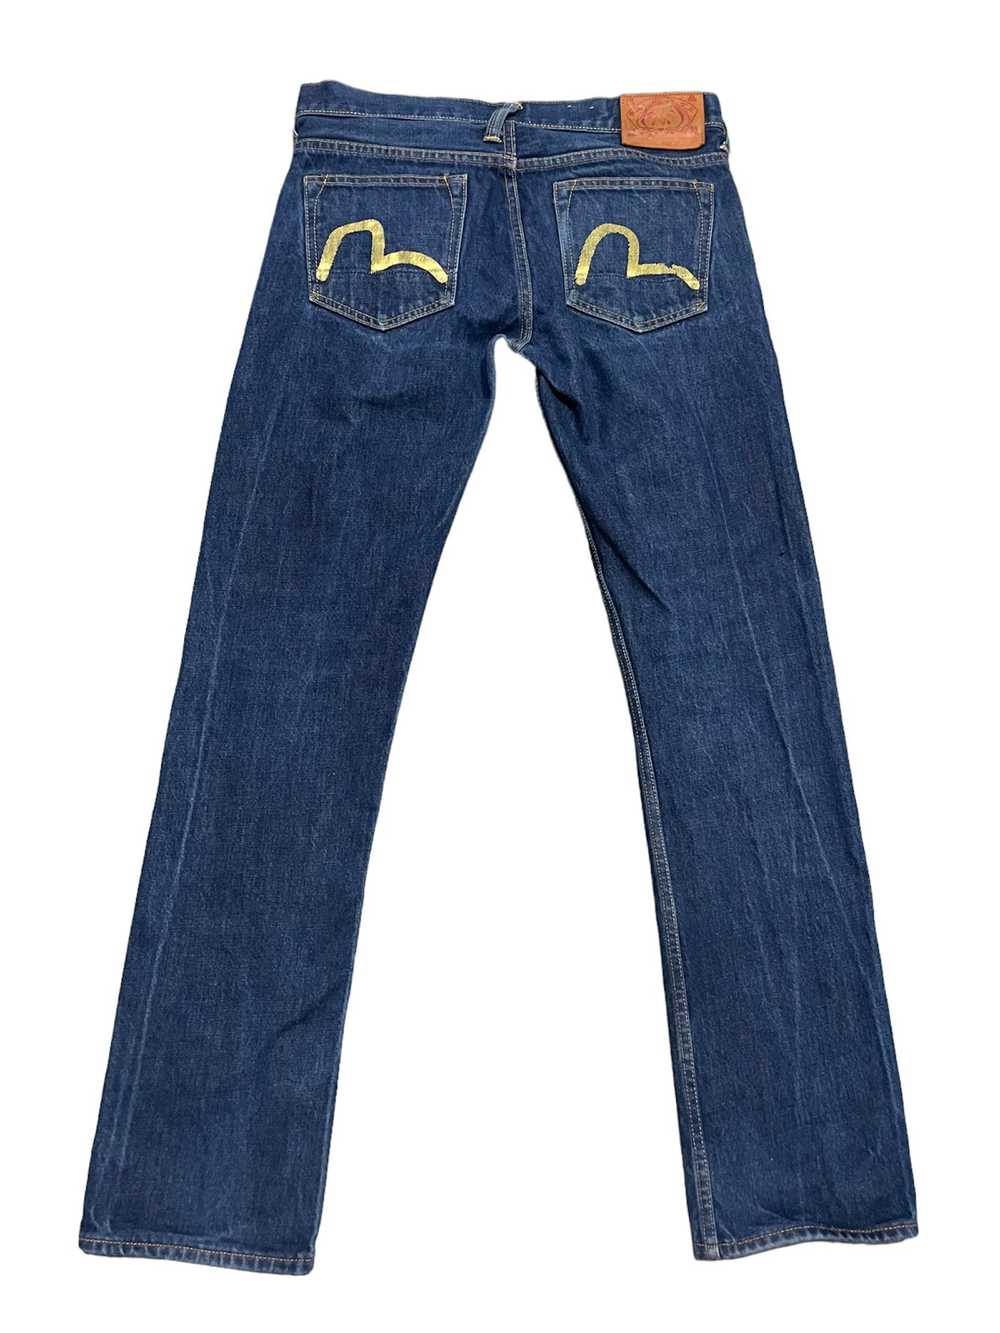 Evisu Vintage Evisu denim jeans - image 3